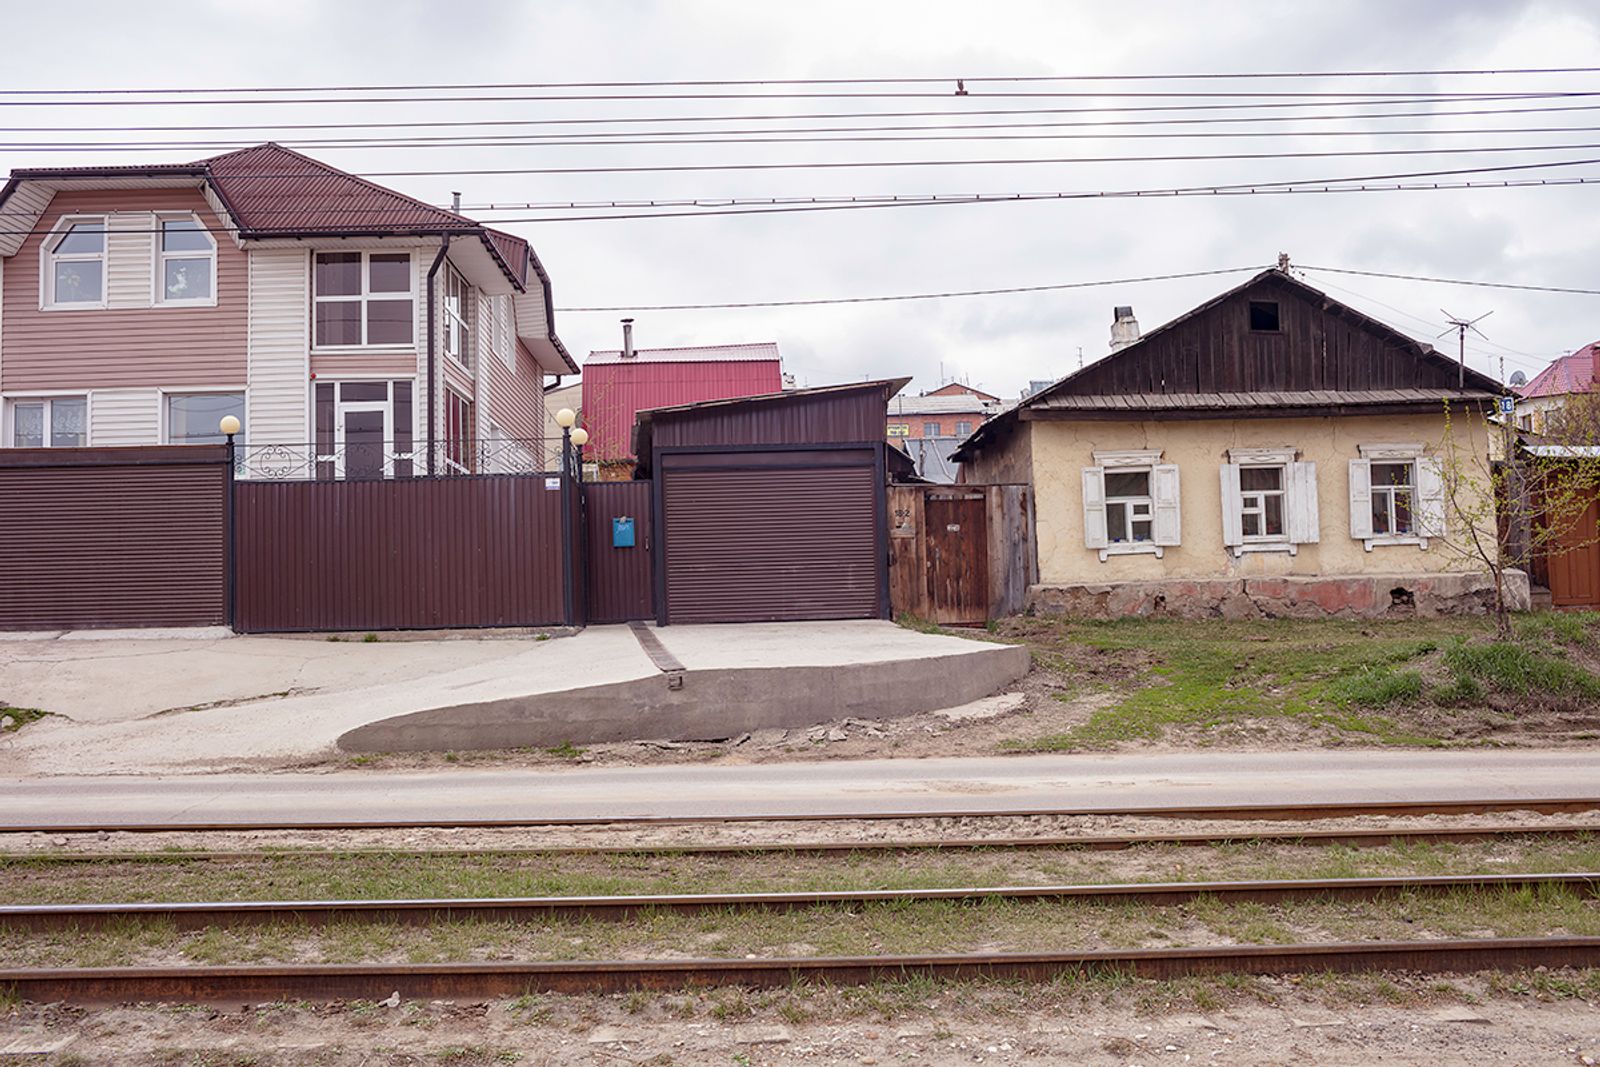 © Victoria Crayhon - Along the Tram Line, Irkutsk RF 2018 30 x 44 inch archival pigment print